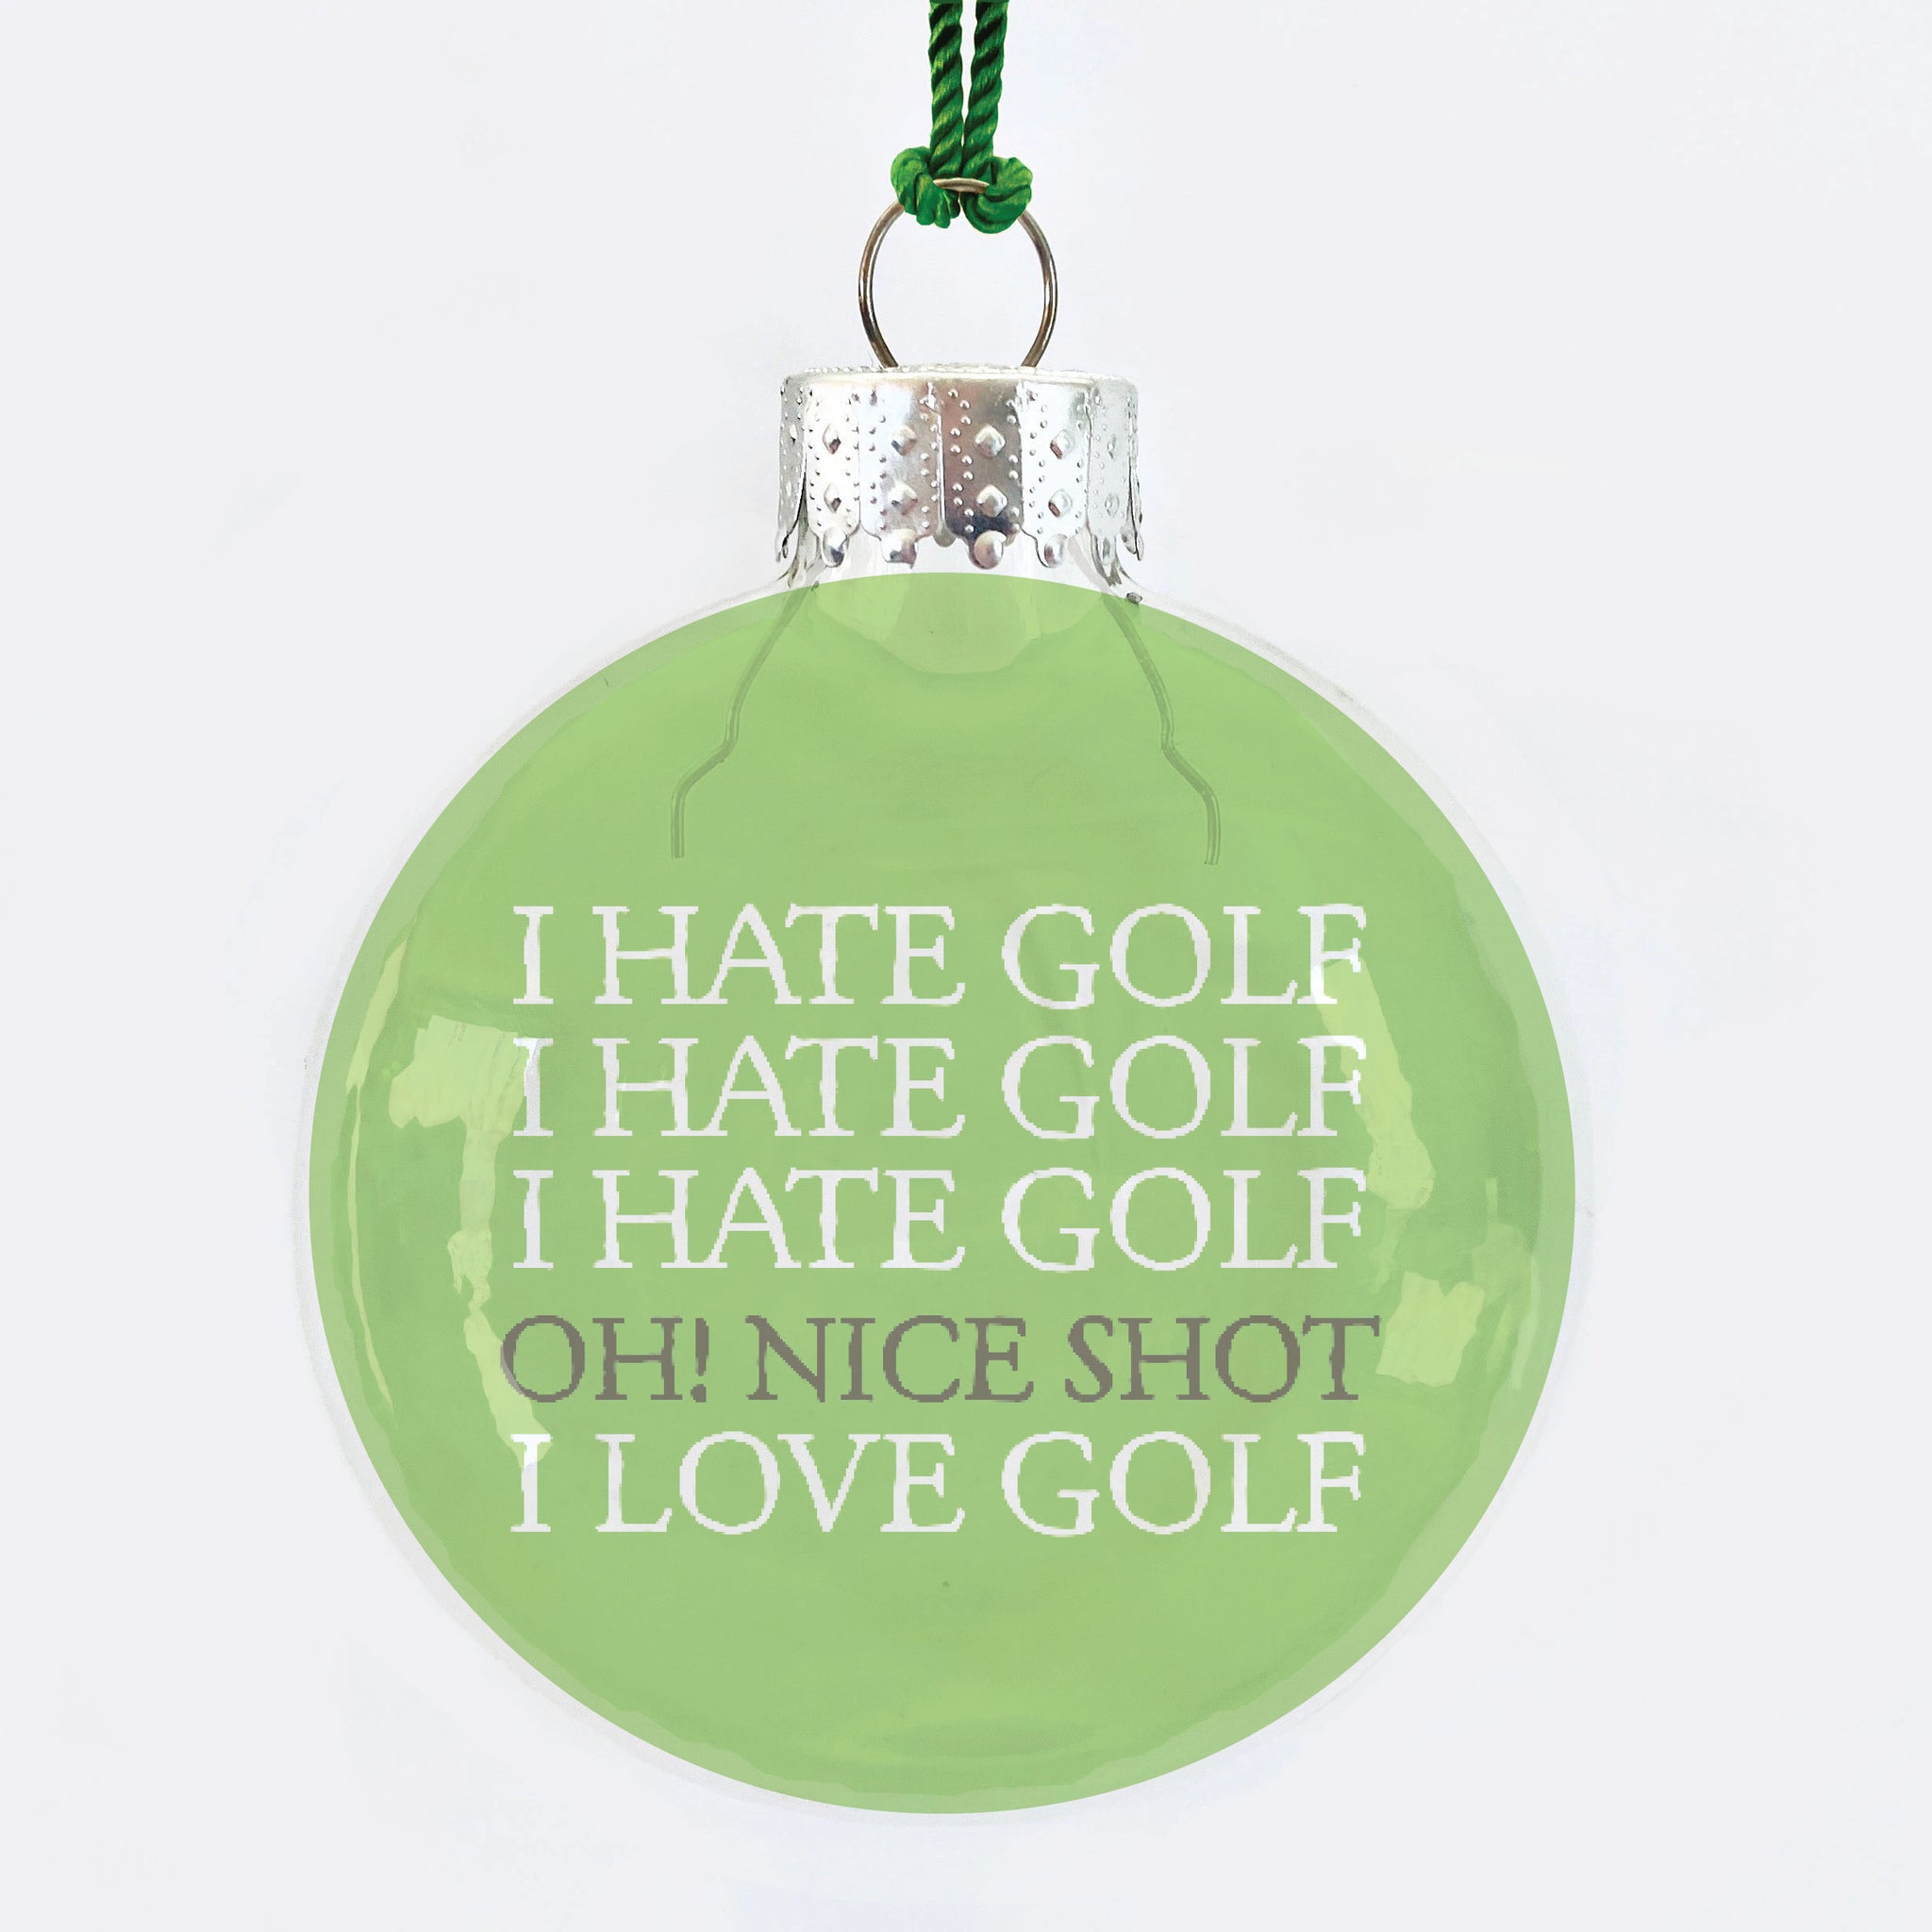 i love golf